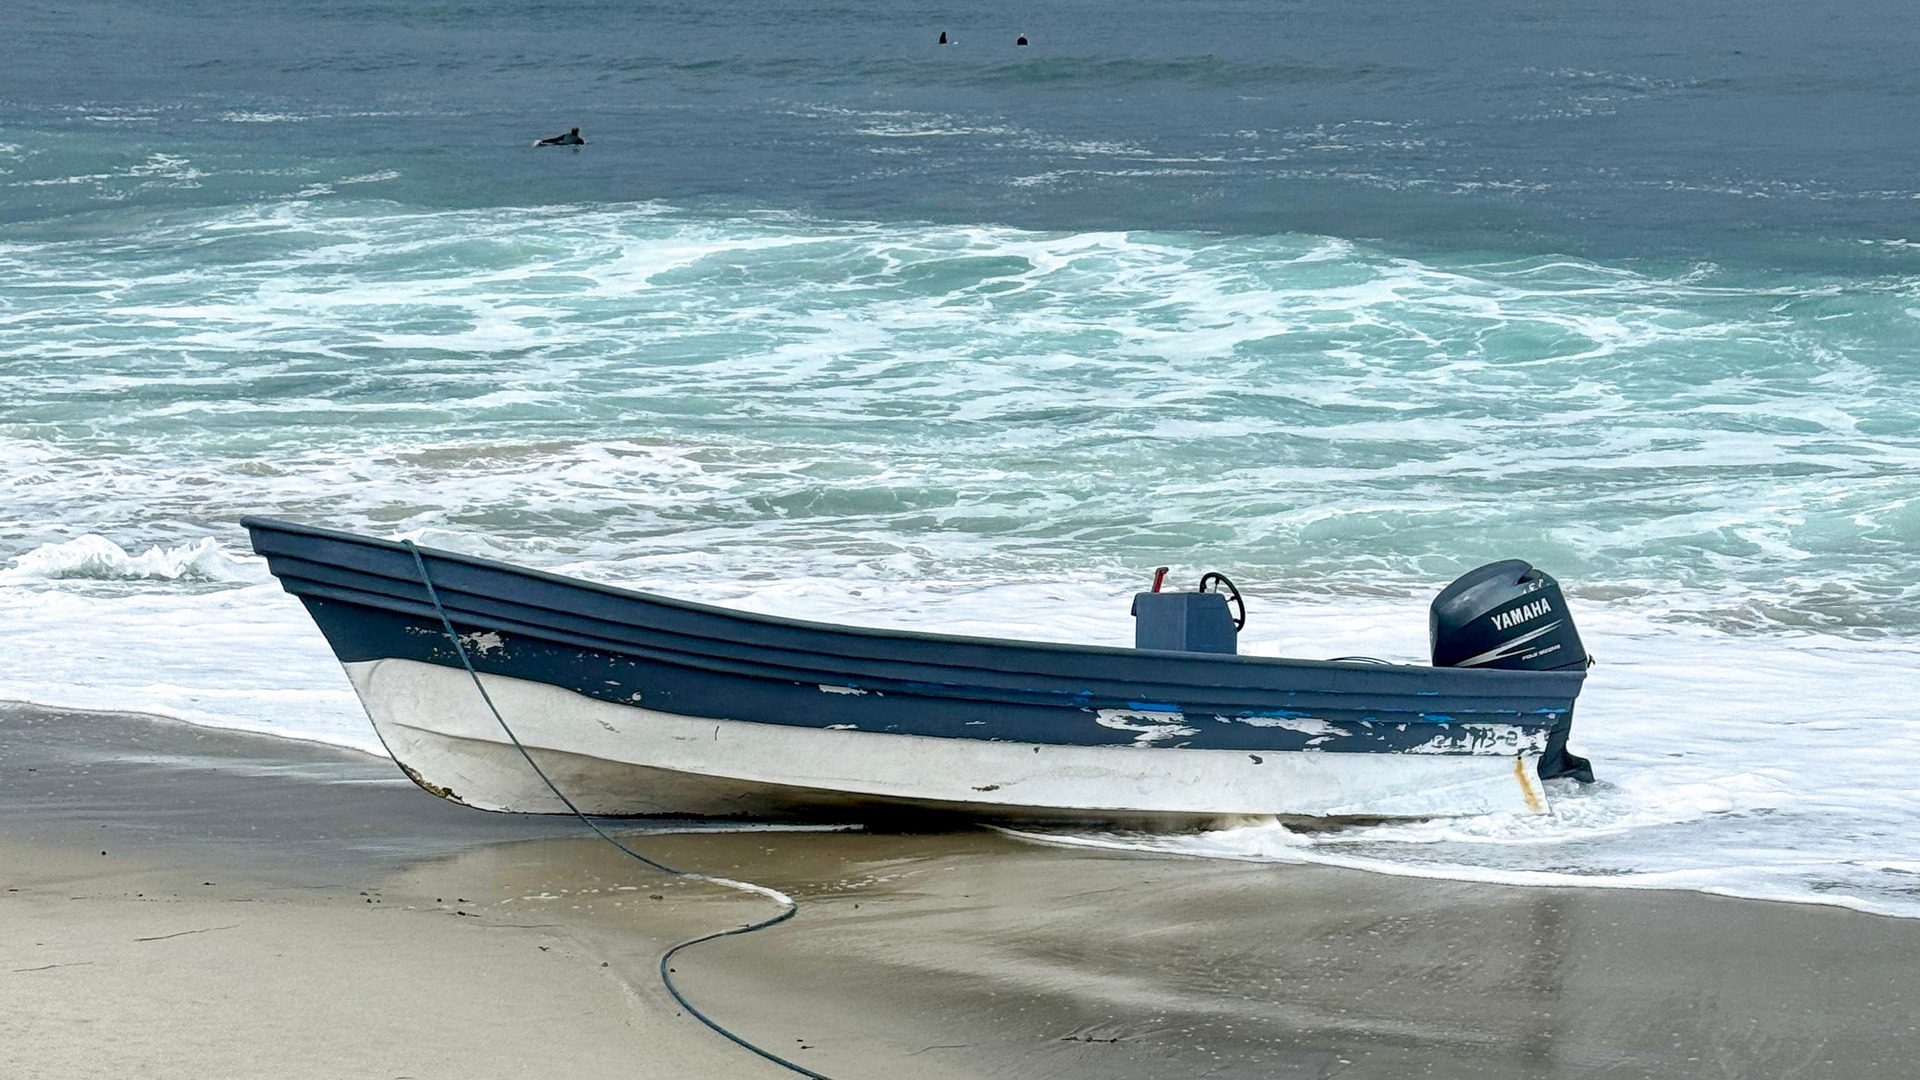 abandoned vessel washes ashore on a la jolla beach